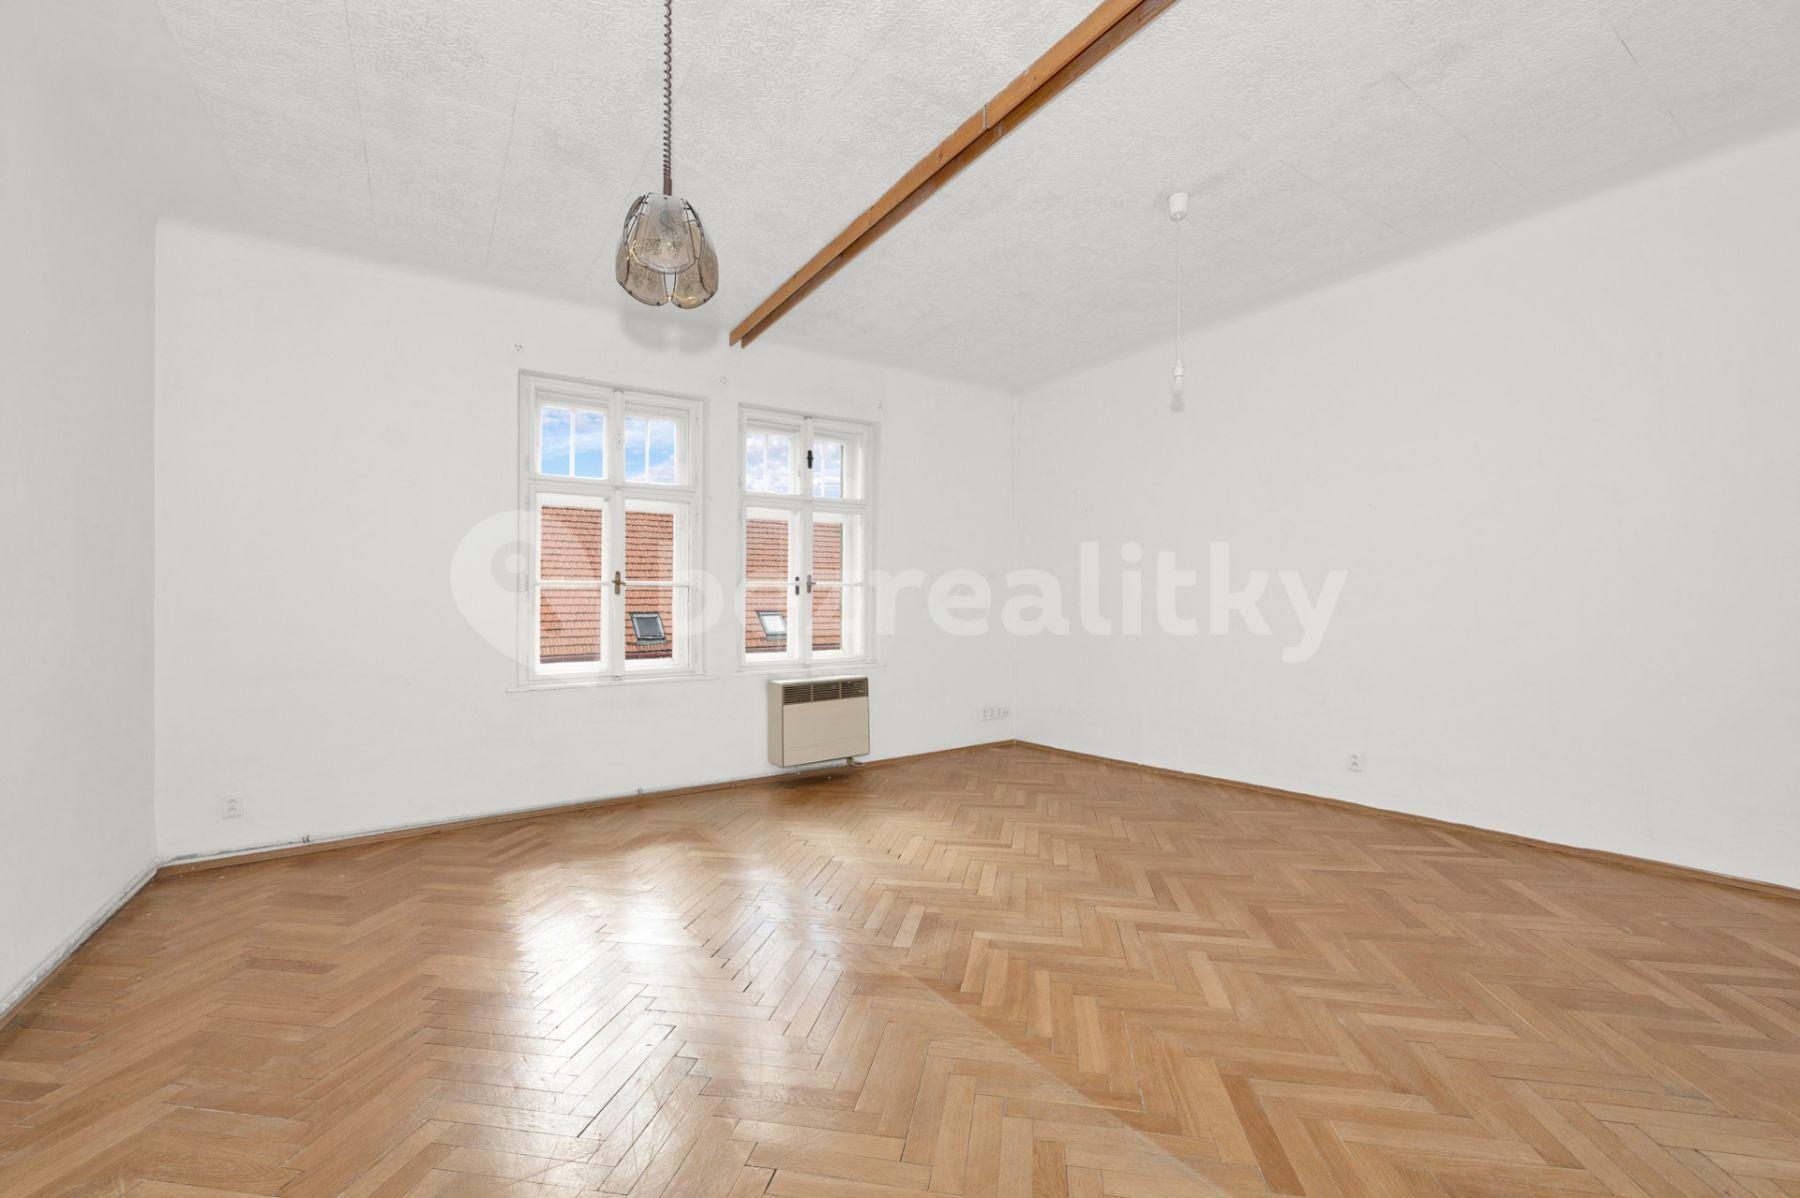 3 bedroom flat to rent, 98 m², Ypsilantiho, Brno, Jihomoravský Region